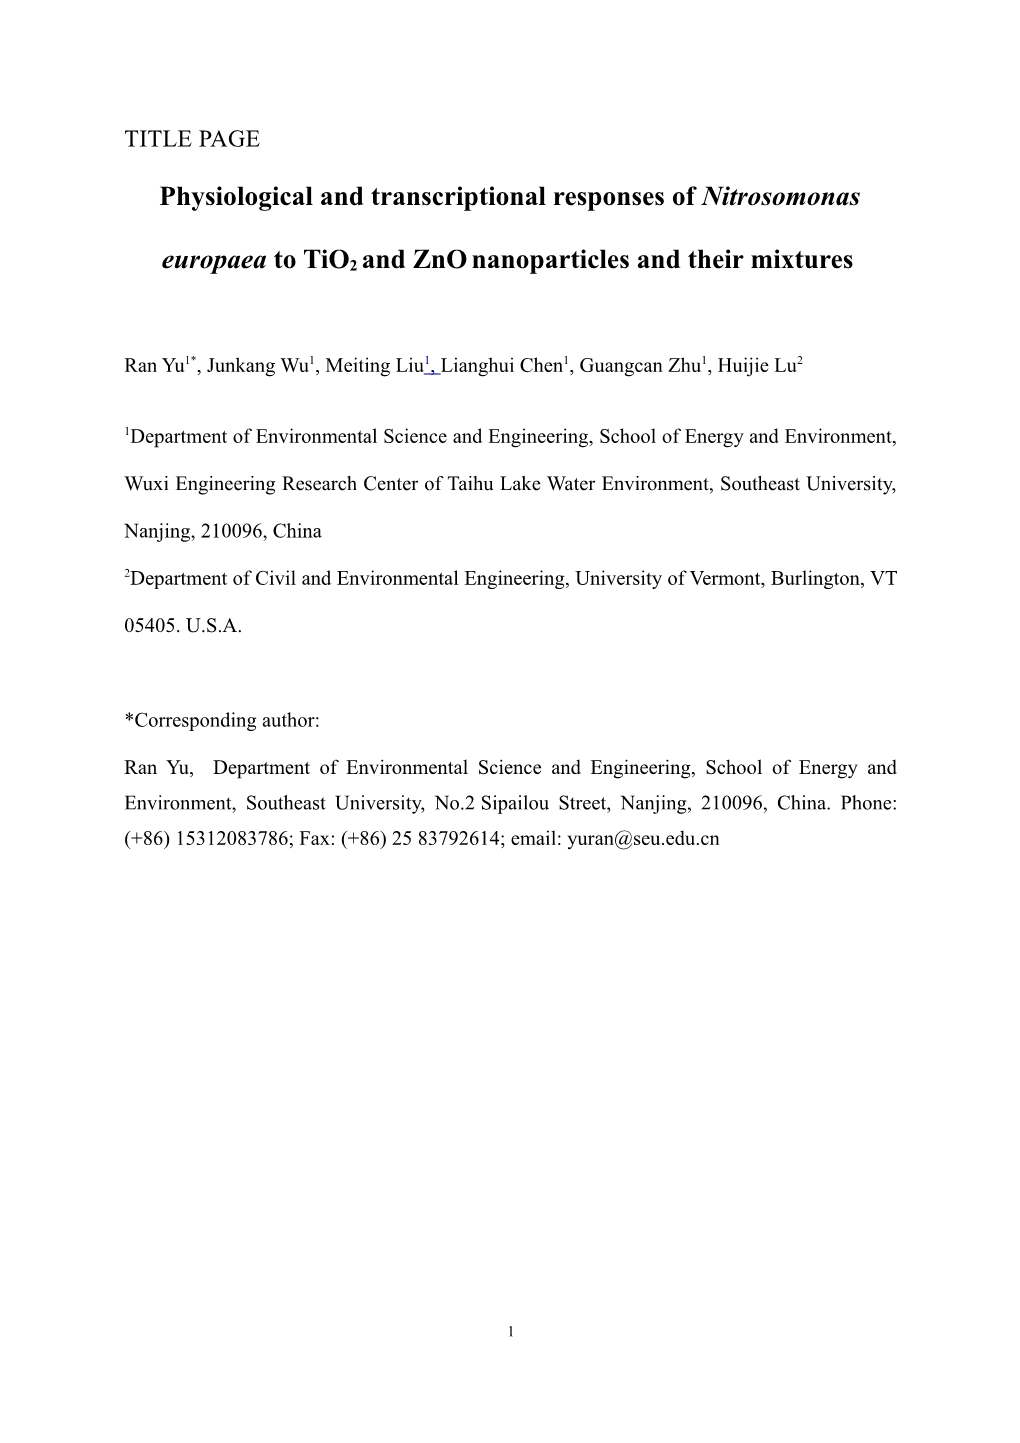 Physiological and Transcriptional Responses of Nitrosomonas Europaea to Tio2and